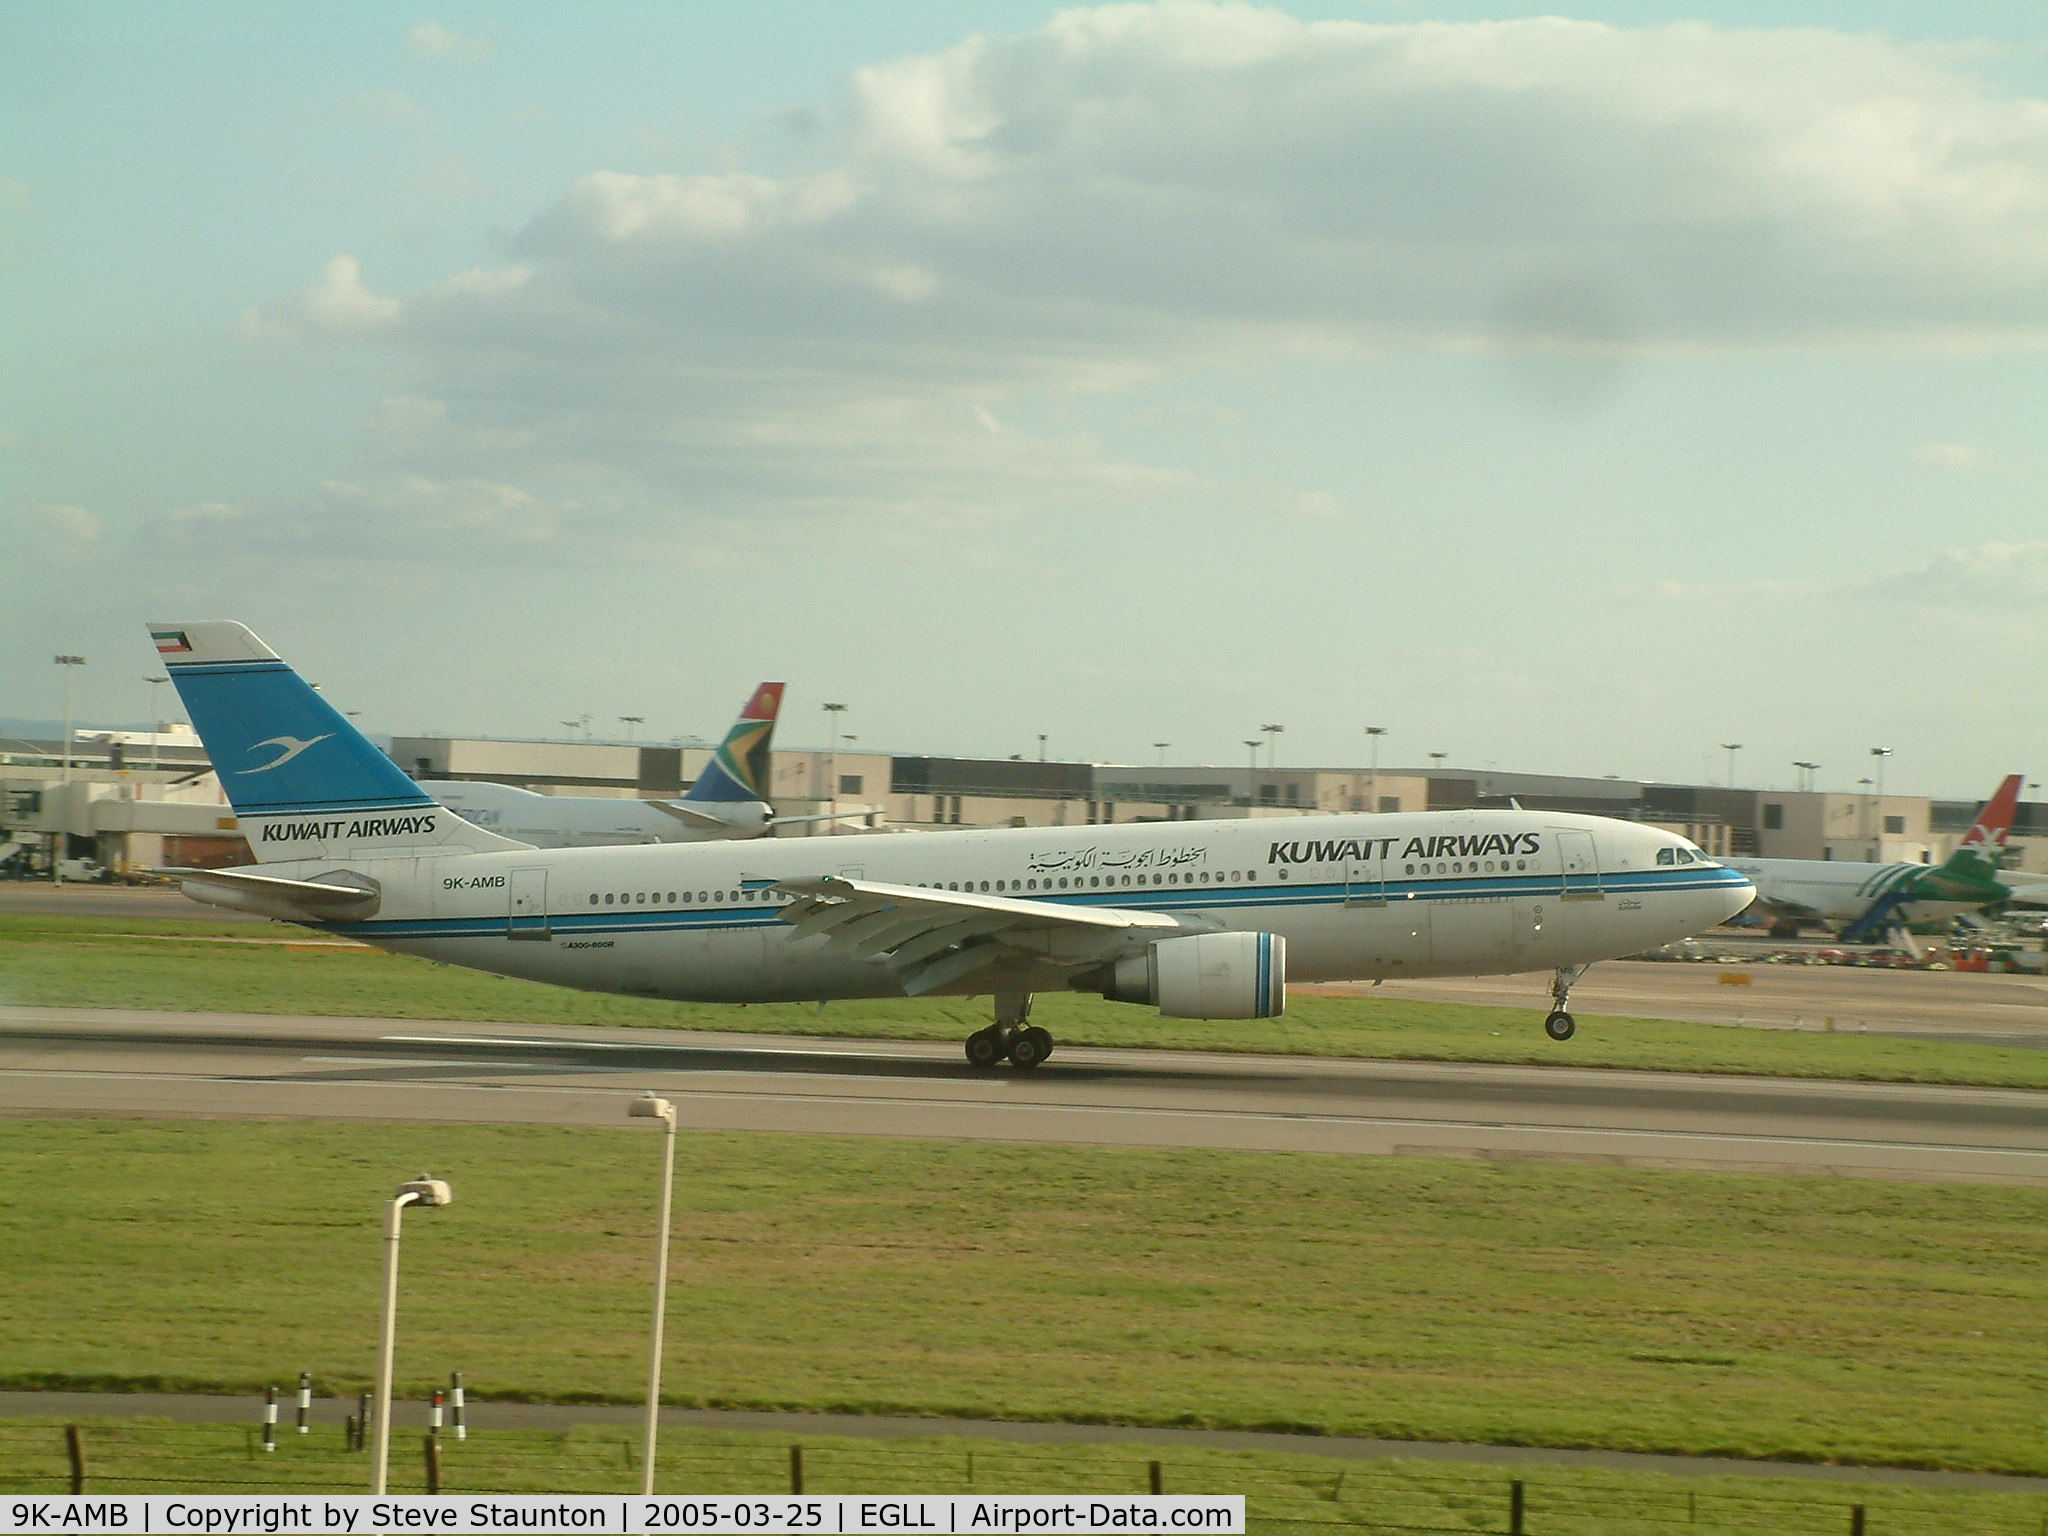 9K-AMB, 1993 Airbus A300B4-605R C/N 694, Taken at Heathrow Airport March 2005